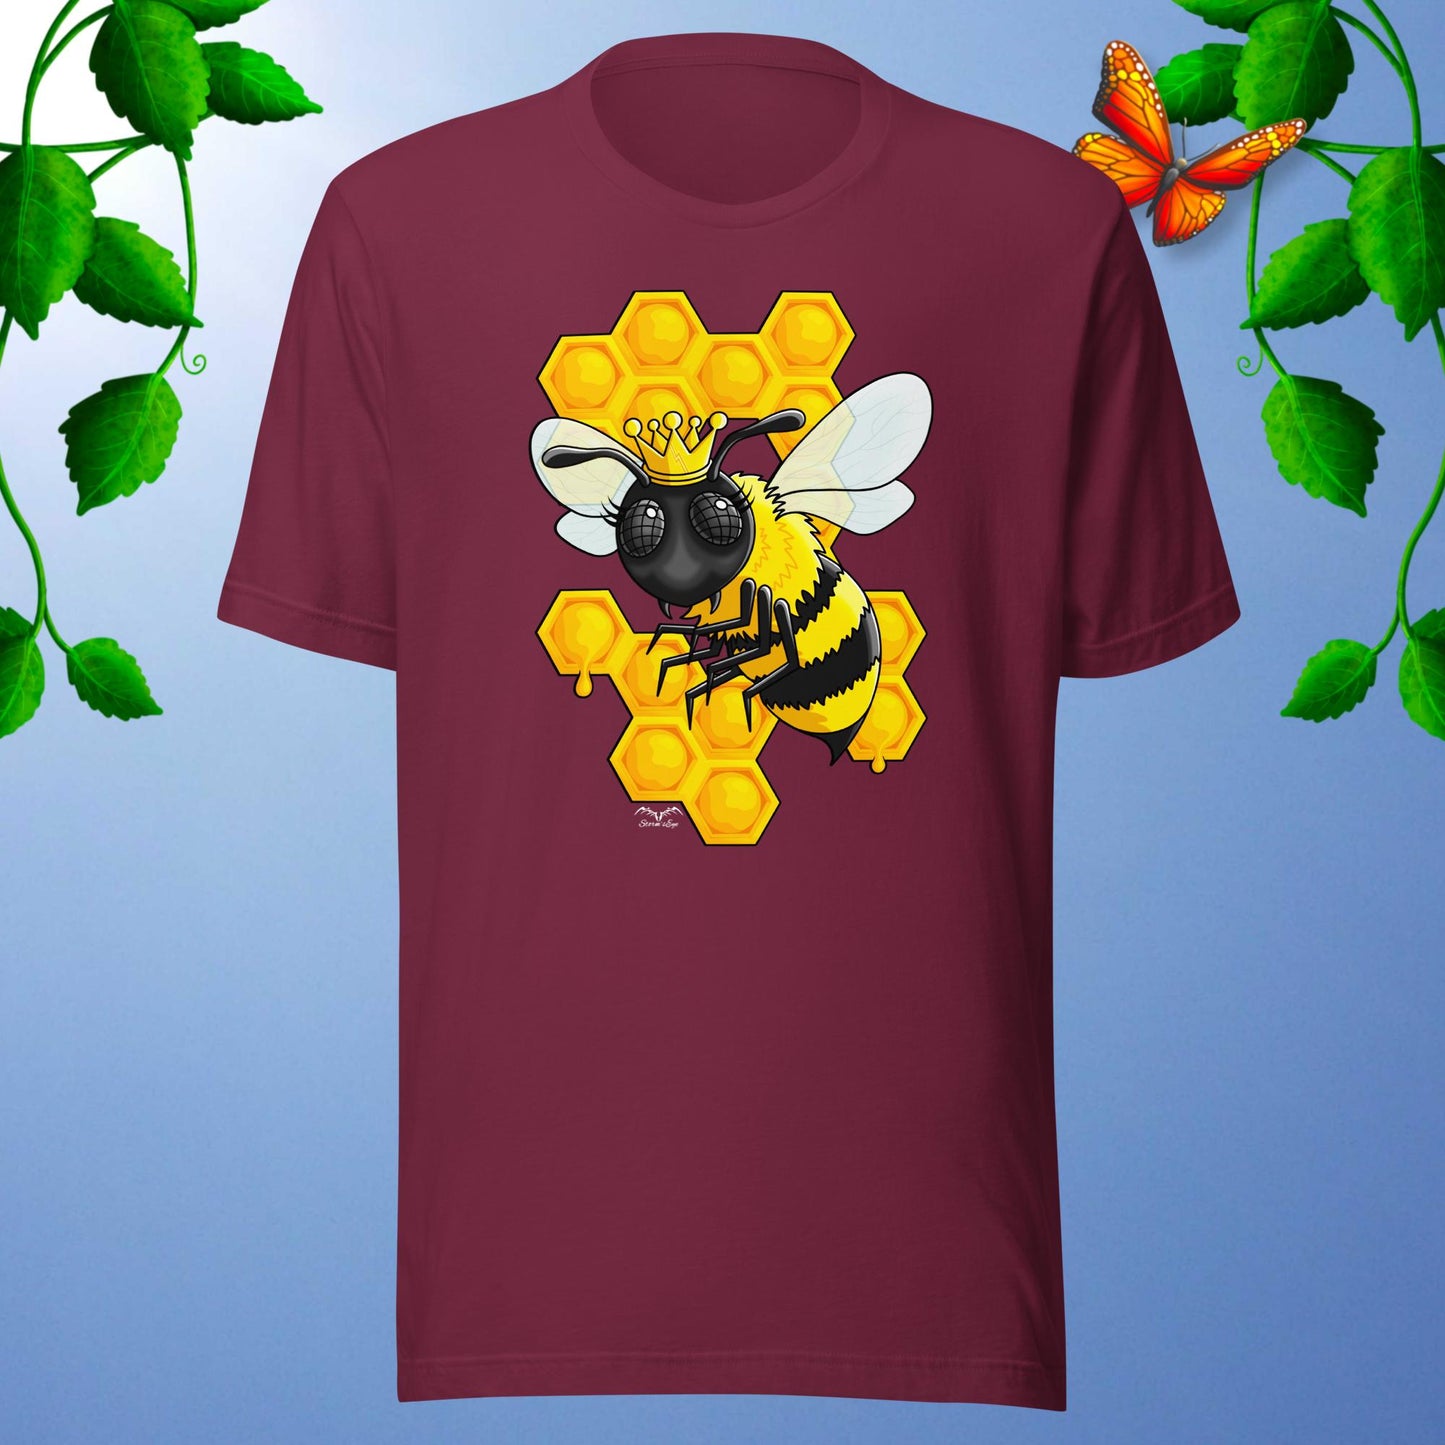 queen bee t-shirt wine red by stormseye design